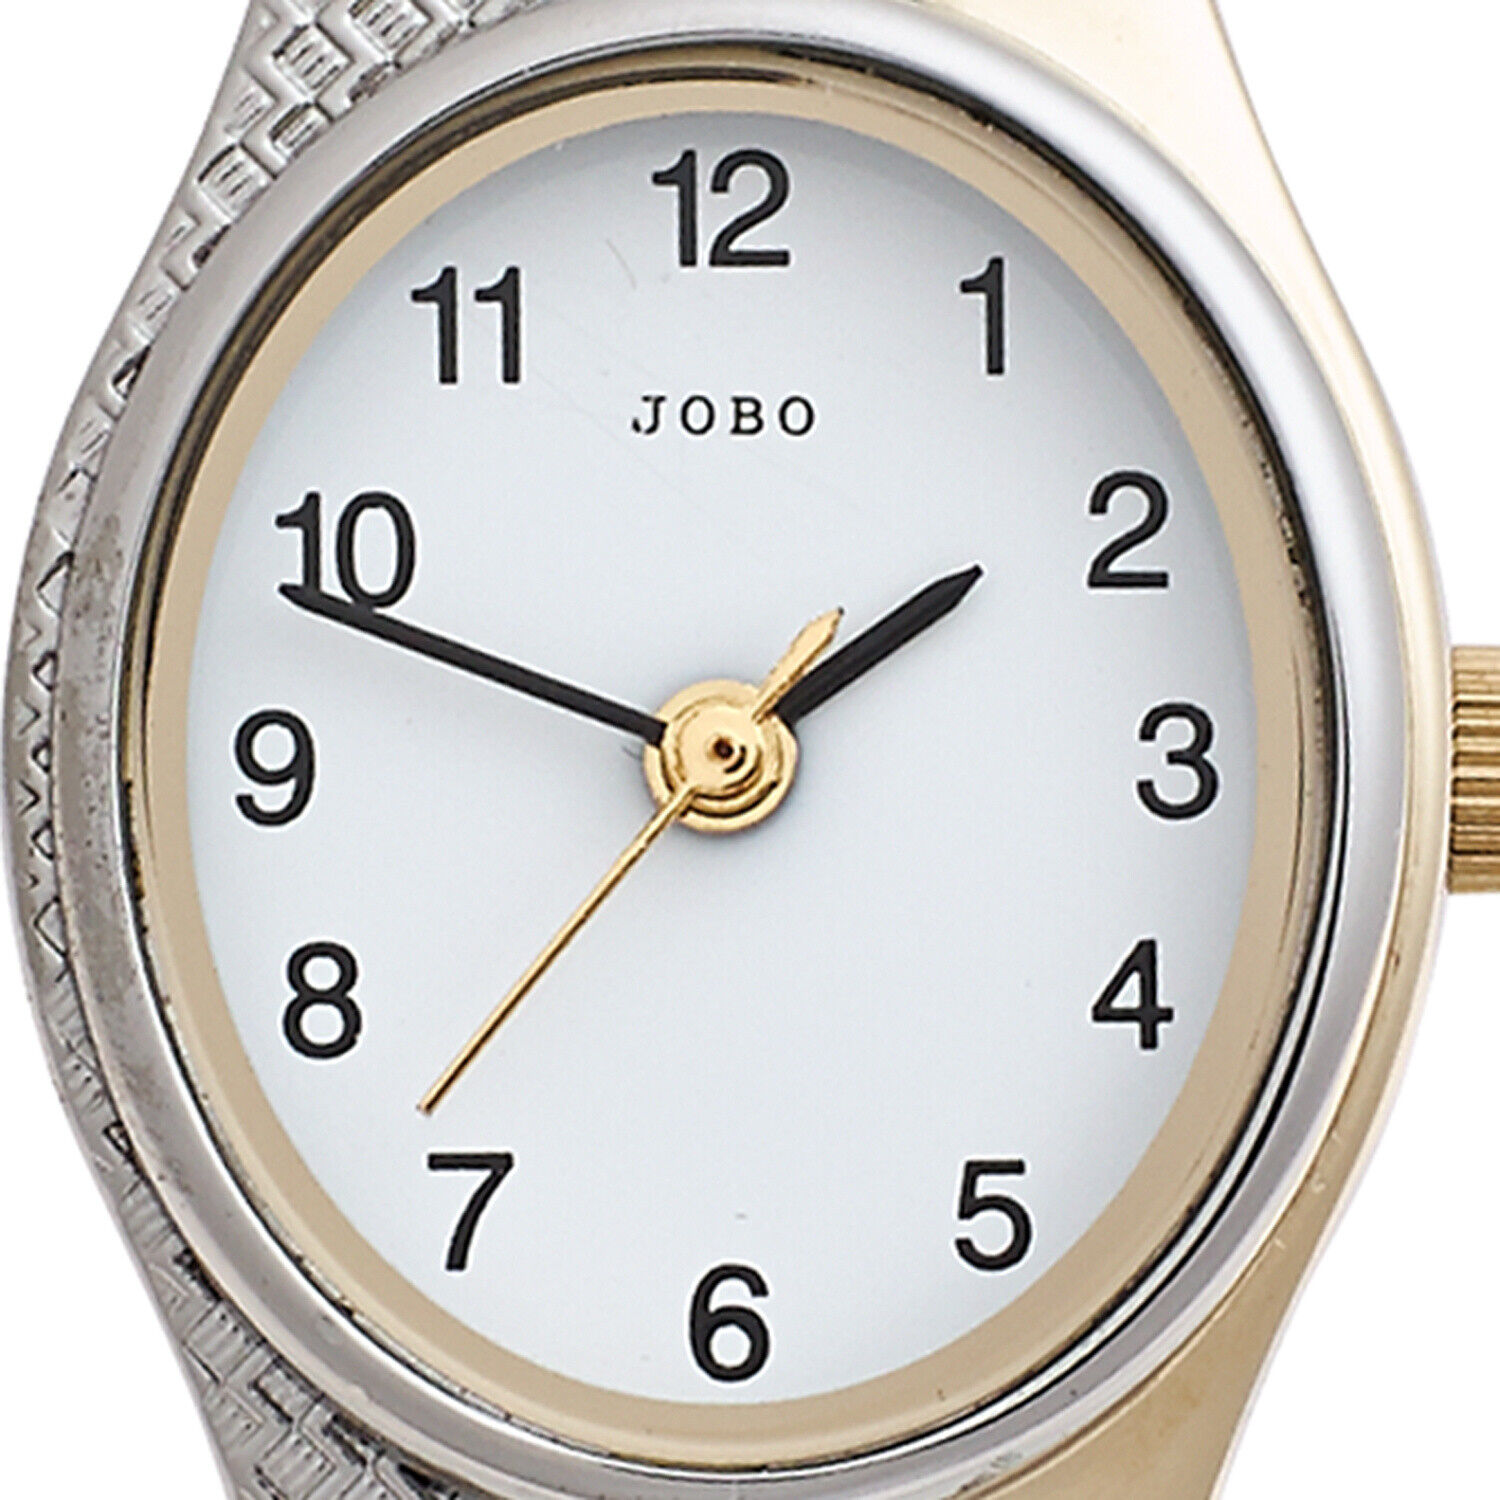 JOBO Damen-armbanduhr oval Quarz analog Edelstahl Teilvergoldet Mineralglas  online kaufen | eBay